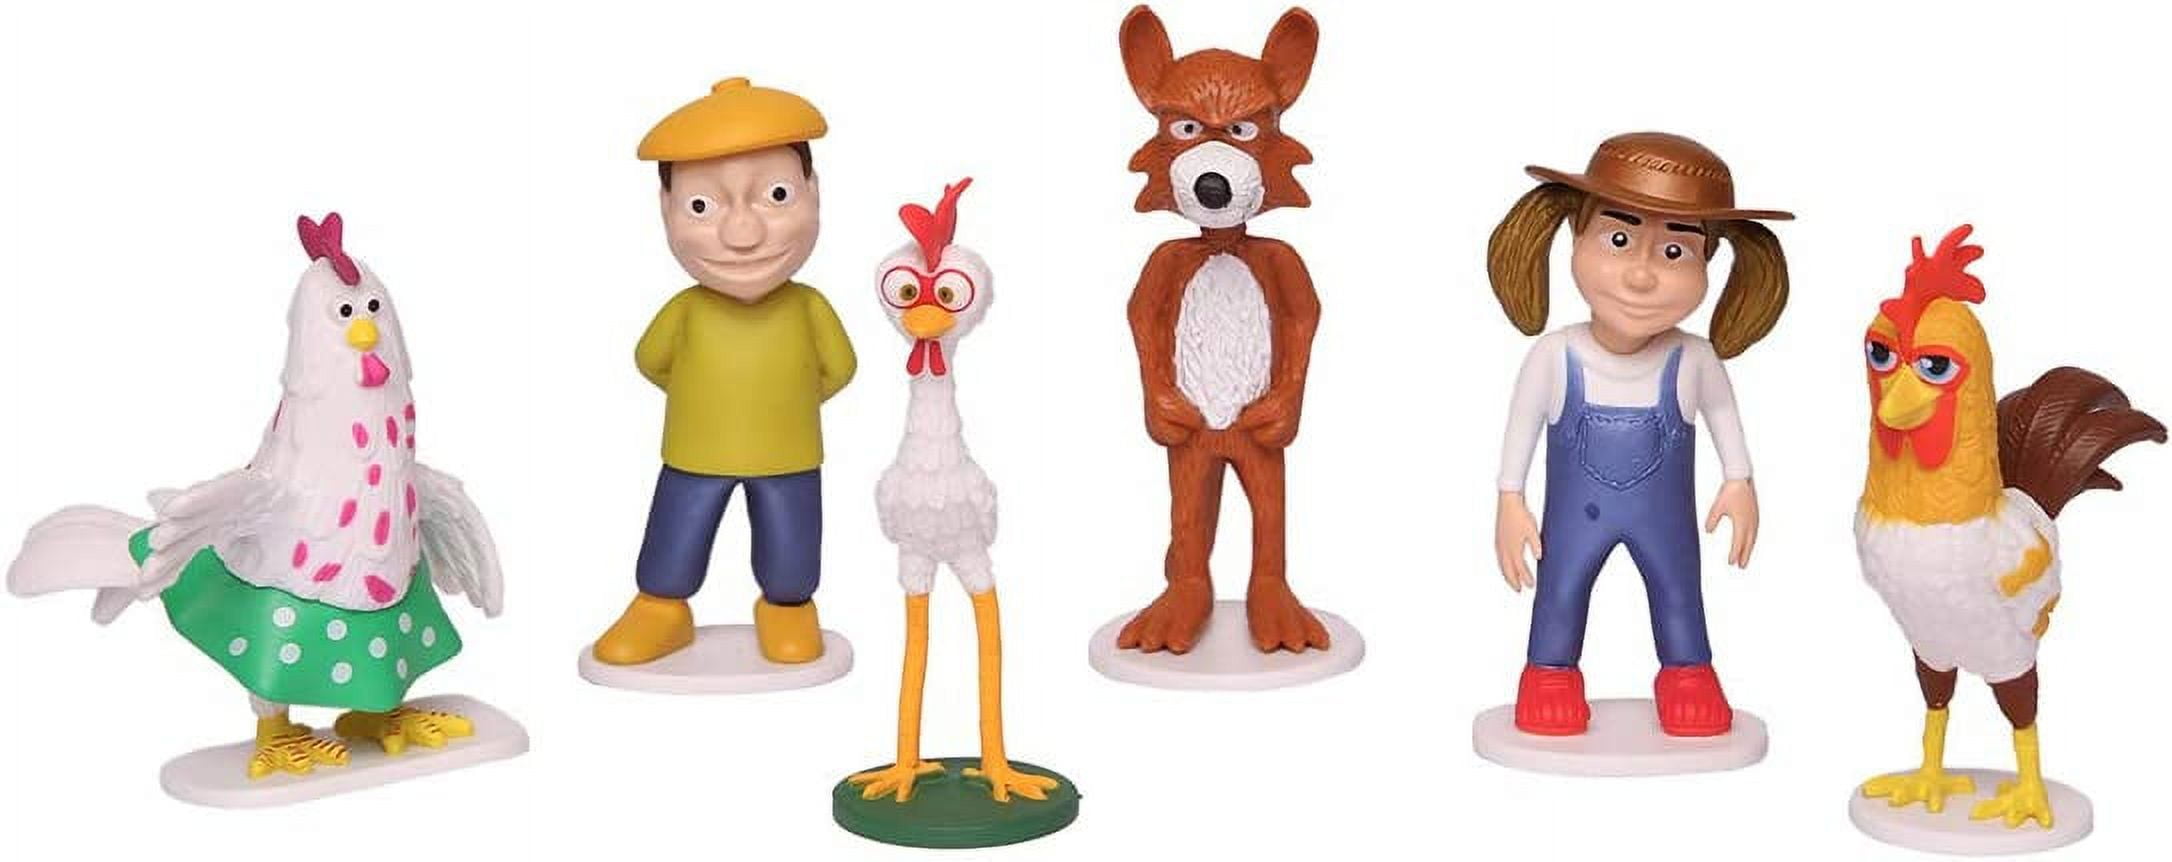 Goods Buddy Farmla Granja De Zenon Action Figures 10pcs Set - Pvc Farm  Animals Toy For 12+